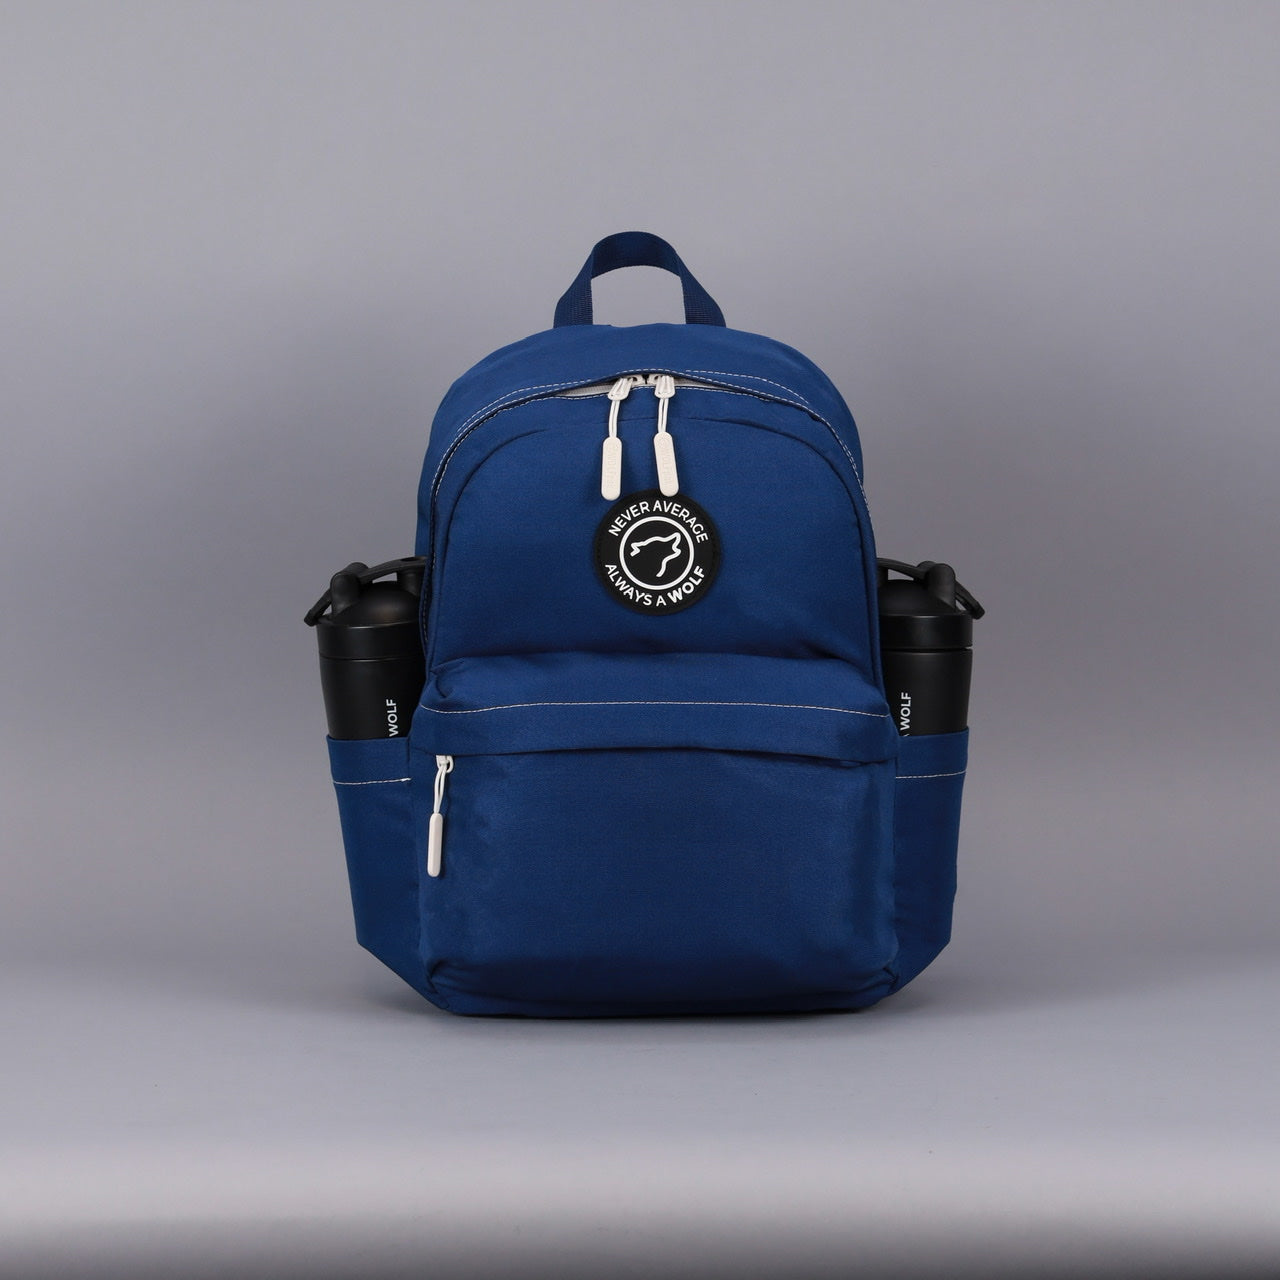 Varsity Blue Classic Backpack